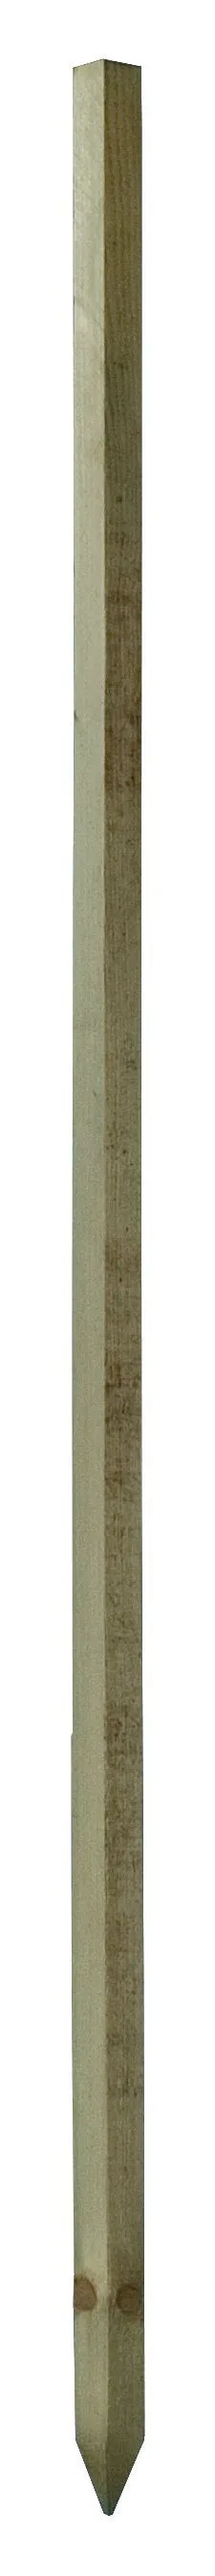 Grange Timber Cane 180cm